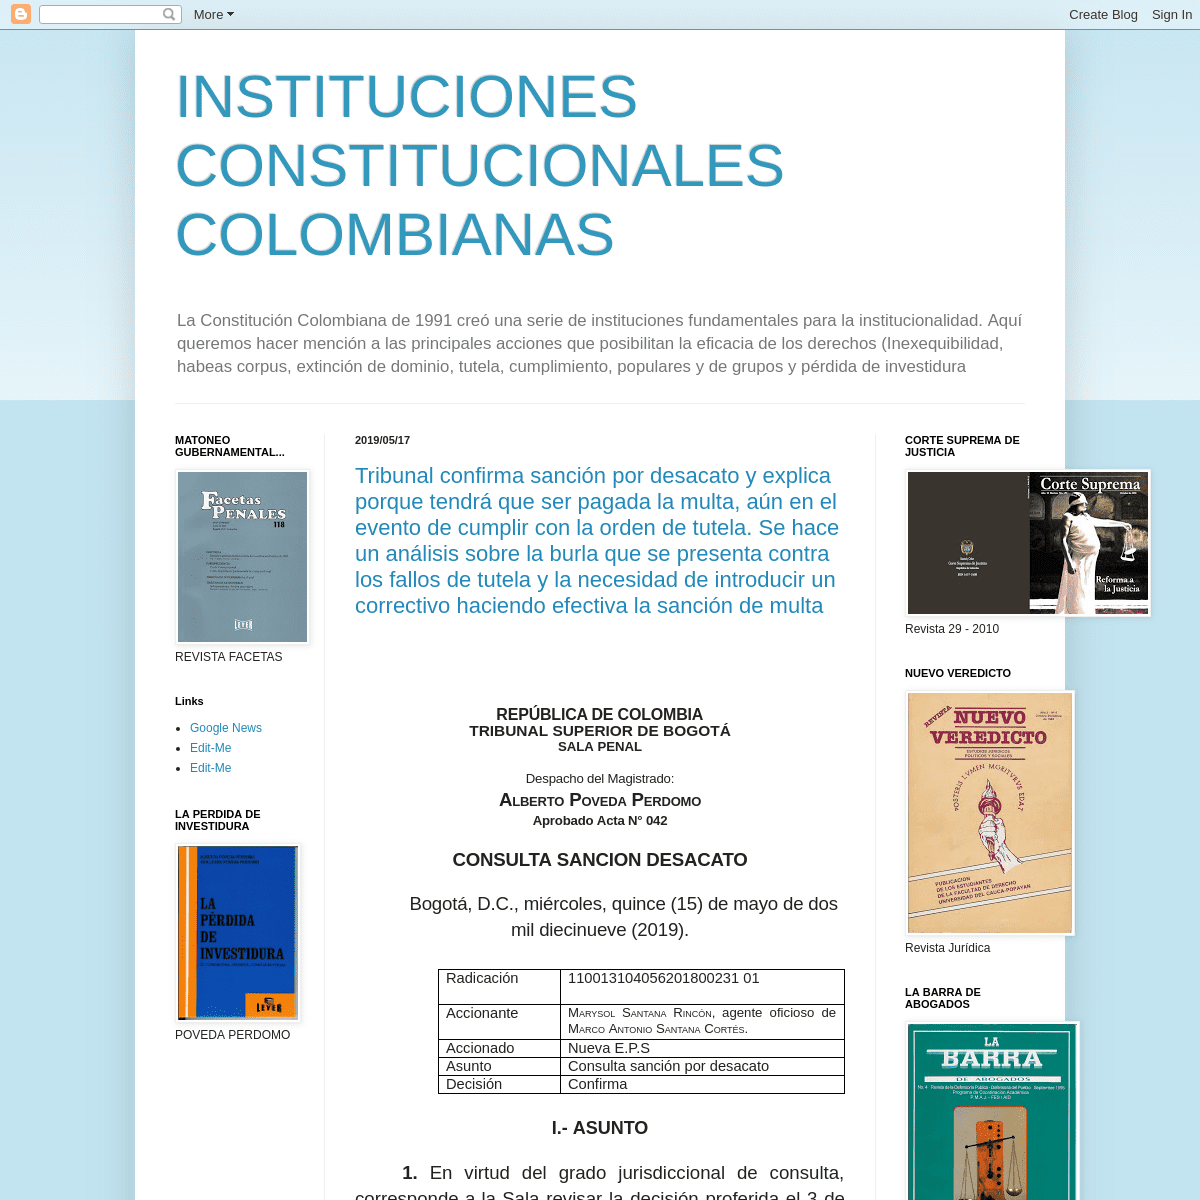 A complete backup of institucionesconstitucionales.blogspot.com